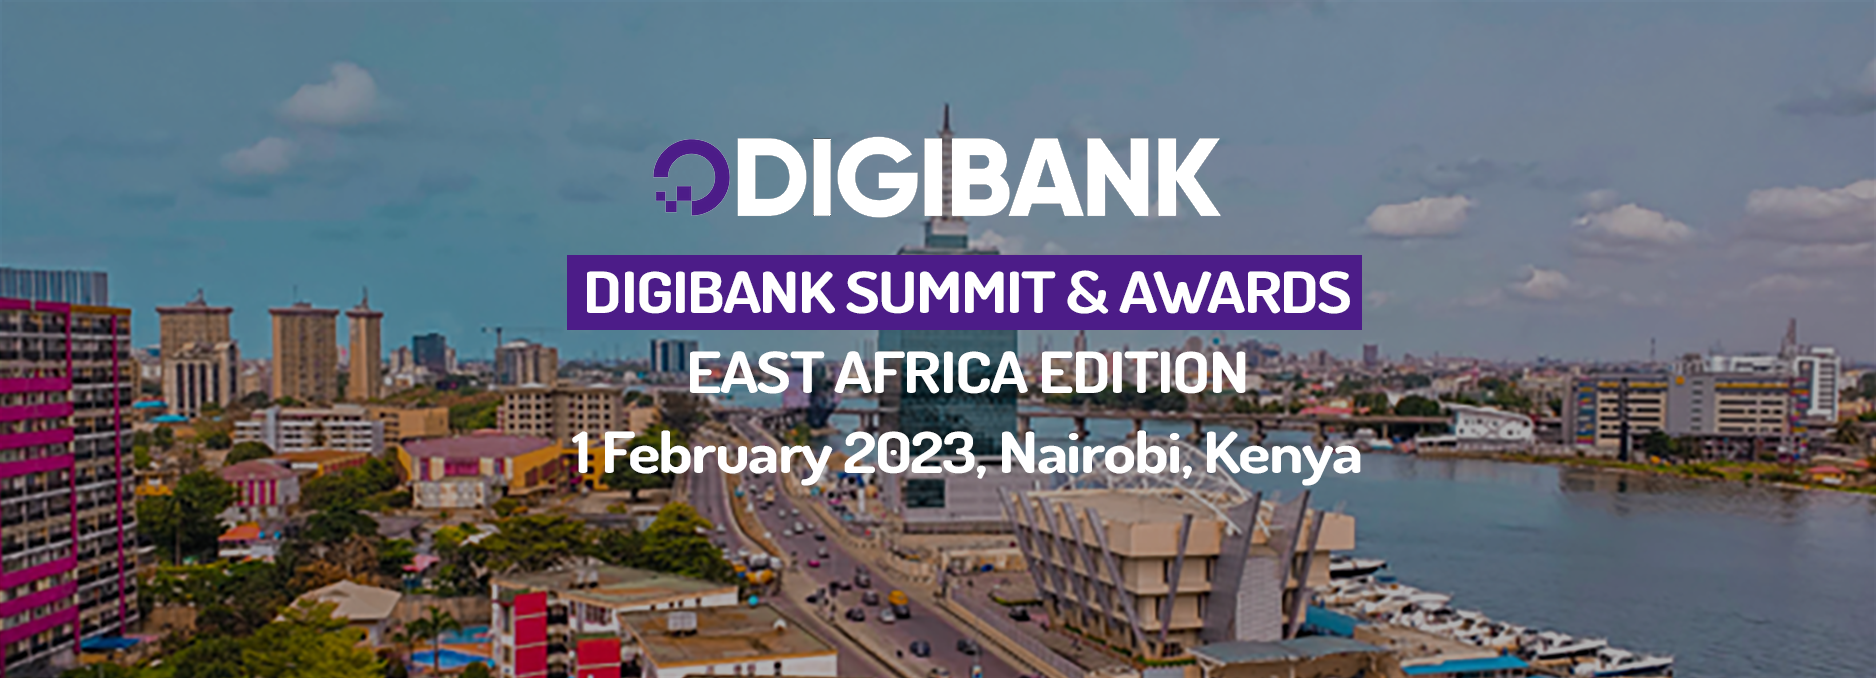 DigiBank Summit & Awards East Africa, Nairobi, Kenya